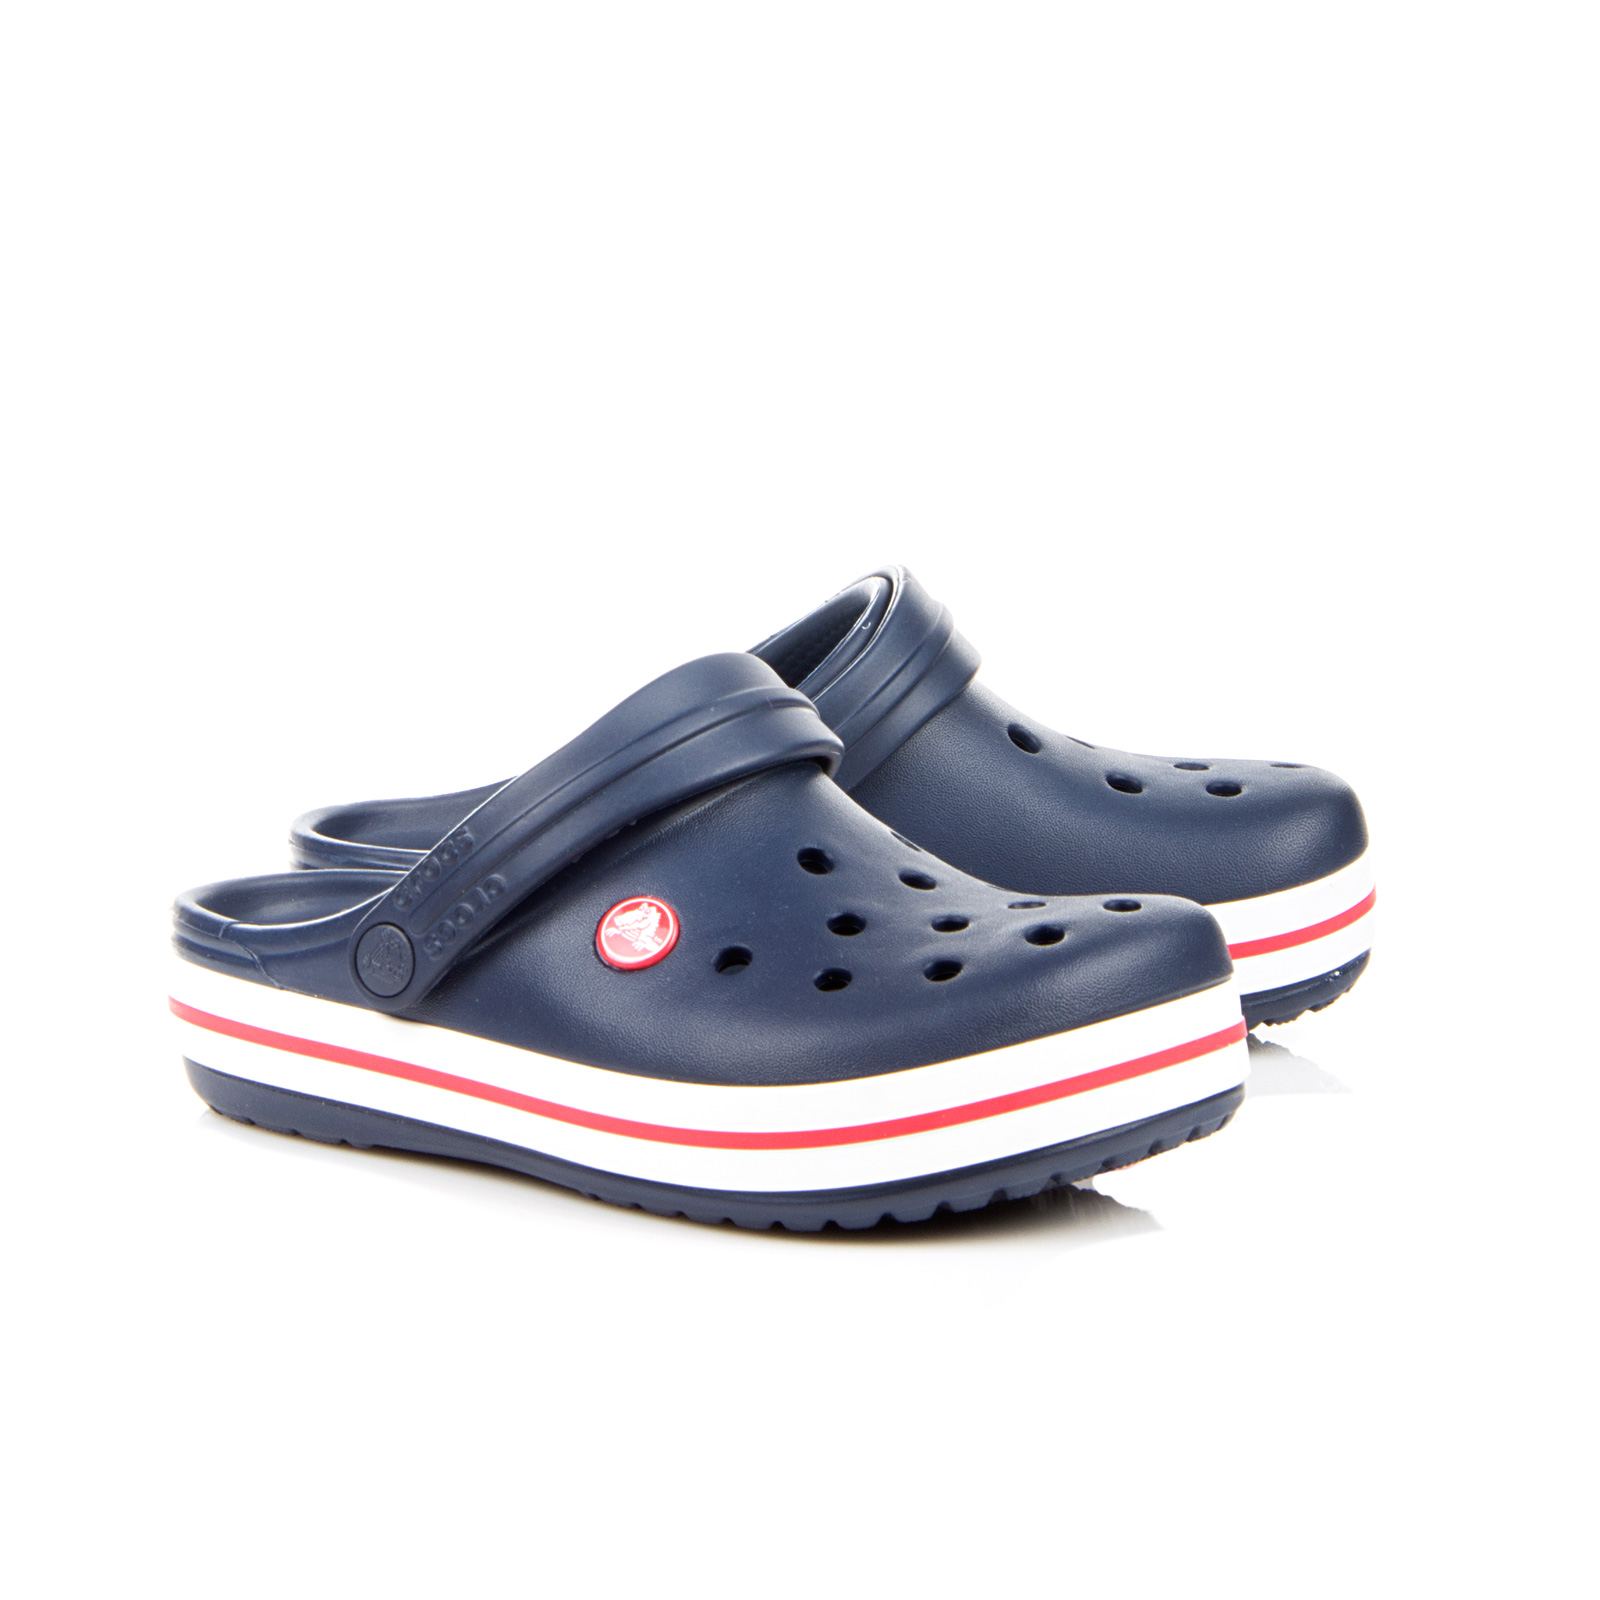 Crocs - CROCBAND CLOG K - NAVY/RED Παιδικά > Παπούτσια > Clogs > Glogs